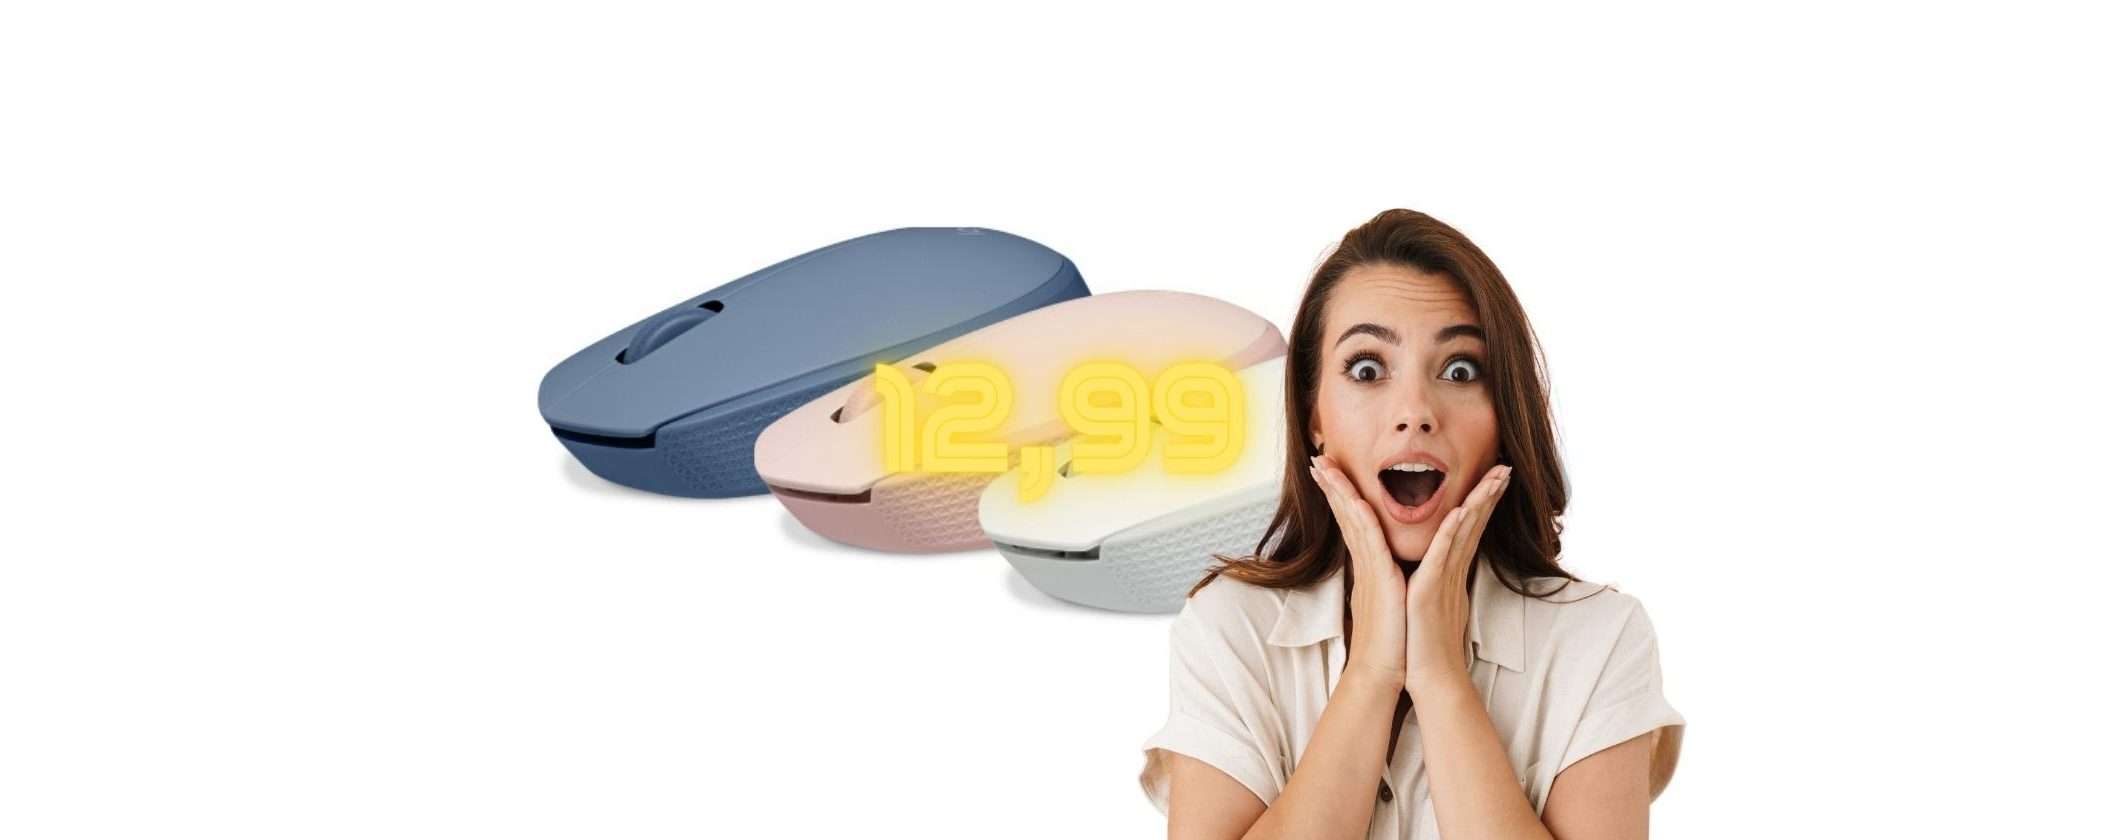 Mouse Logitech M171 Wireless a soli 12,99€ su Amazon